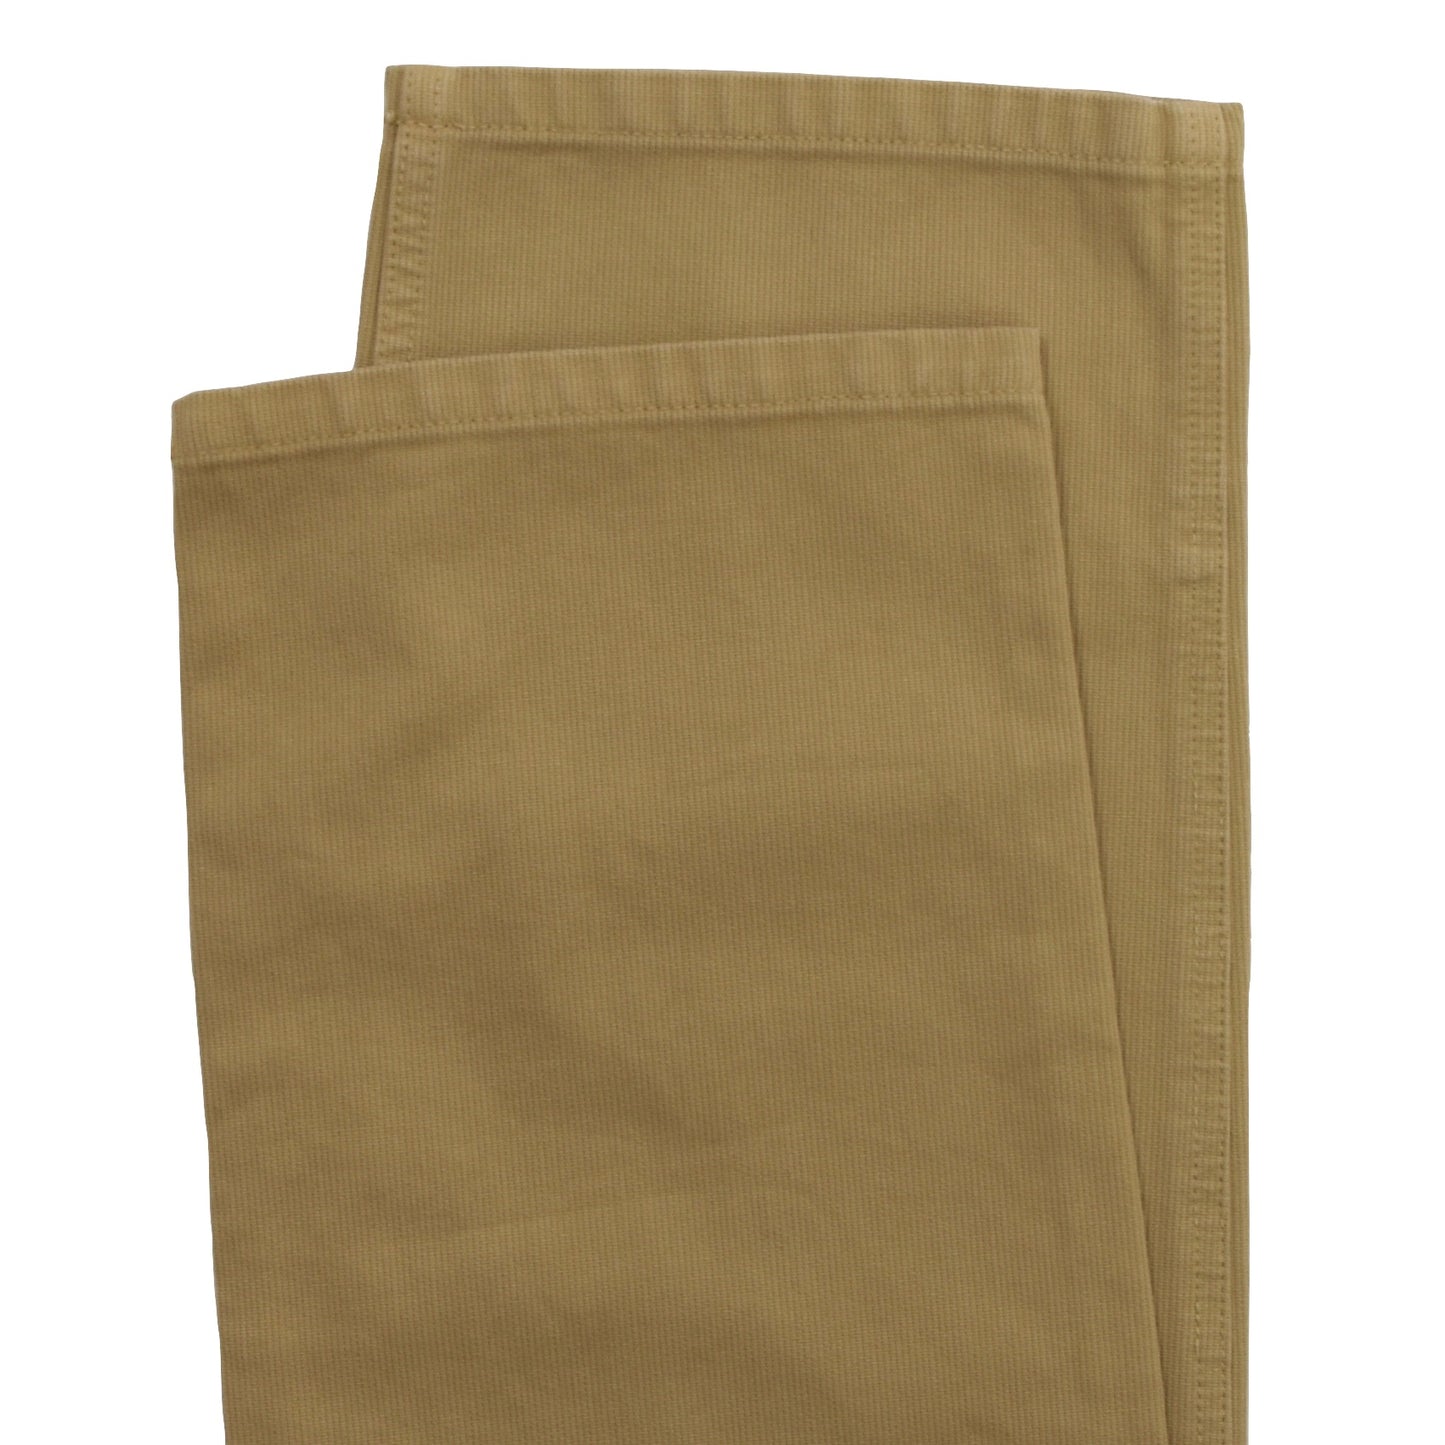 Eat Dust Workwear Cotton Pants Size W34 - Tan/Yellow